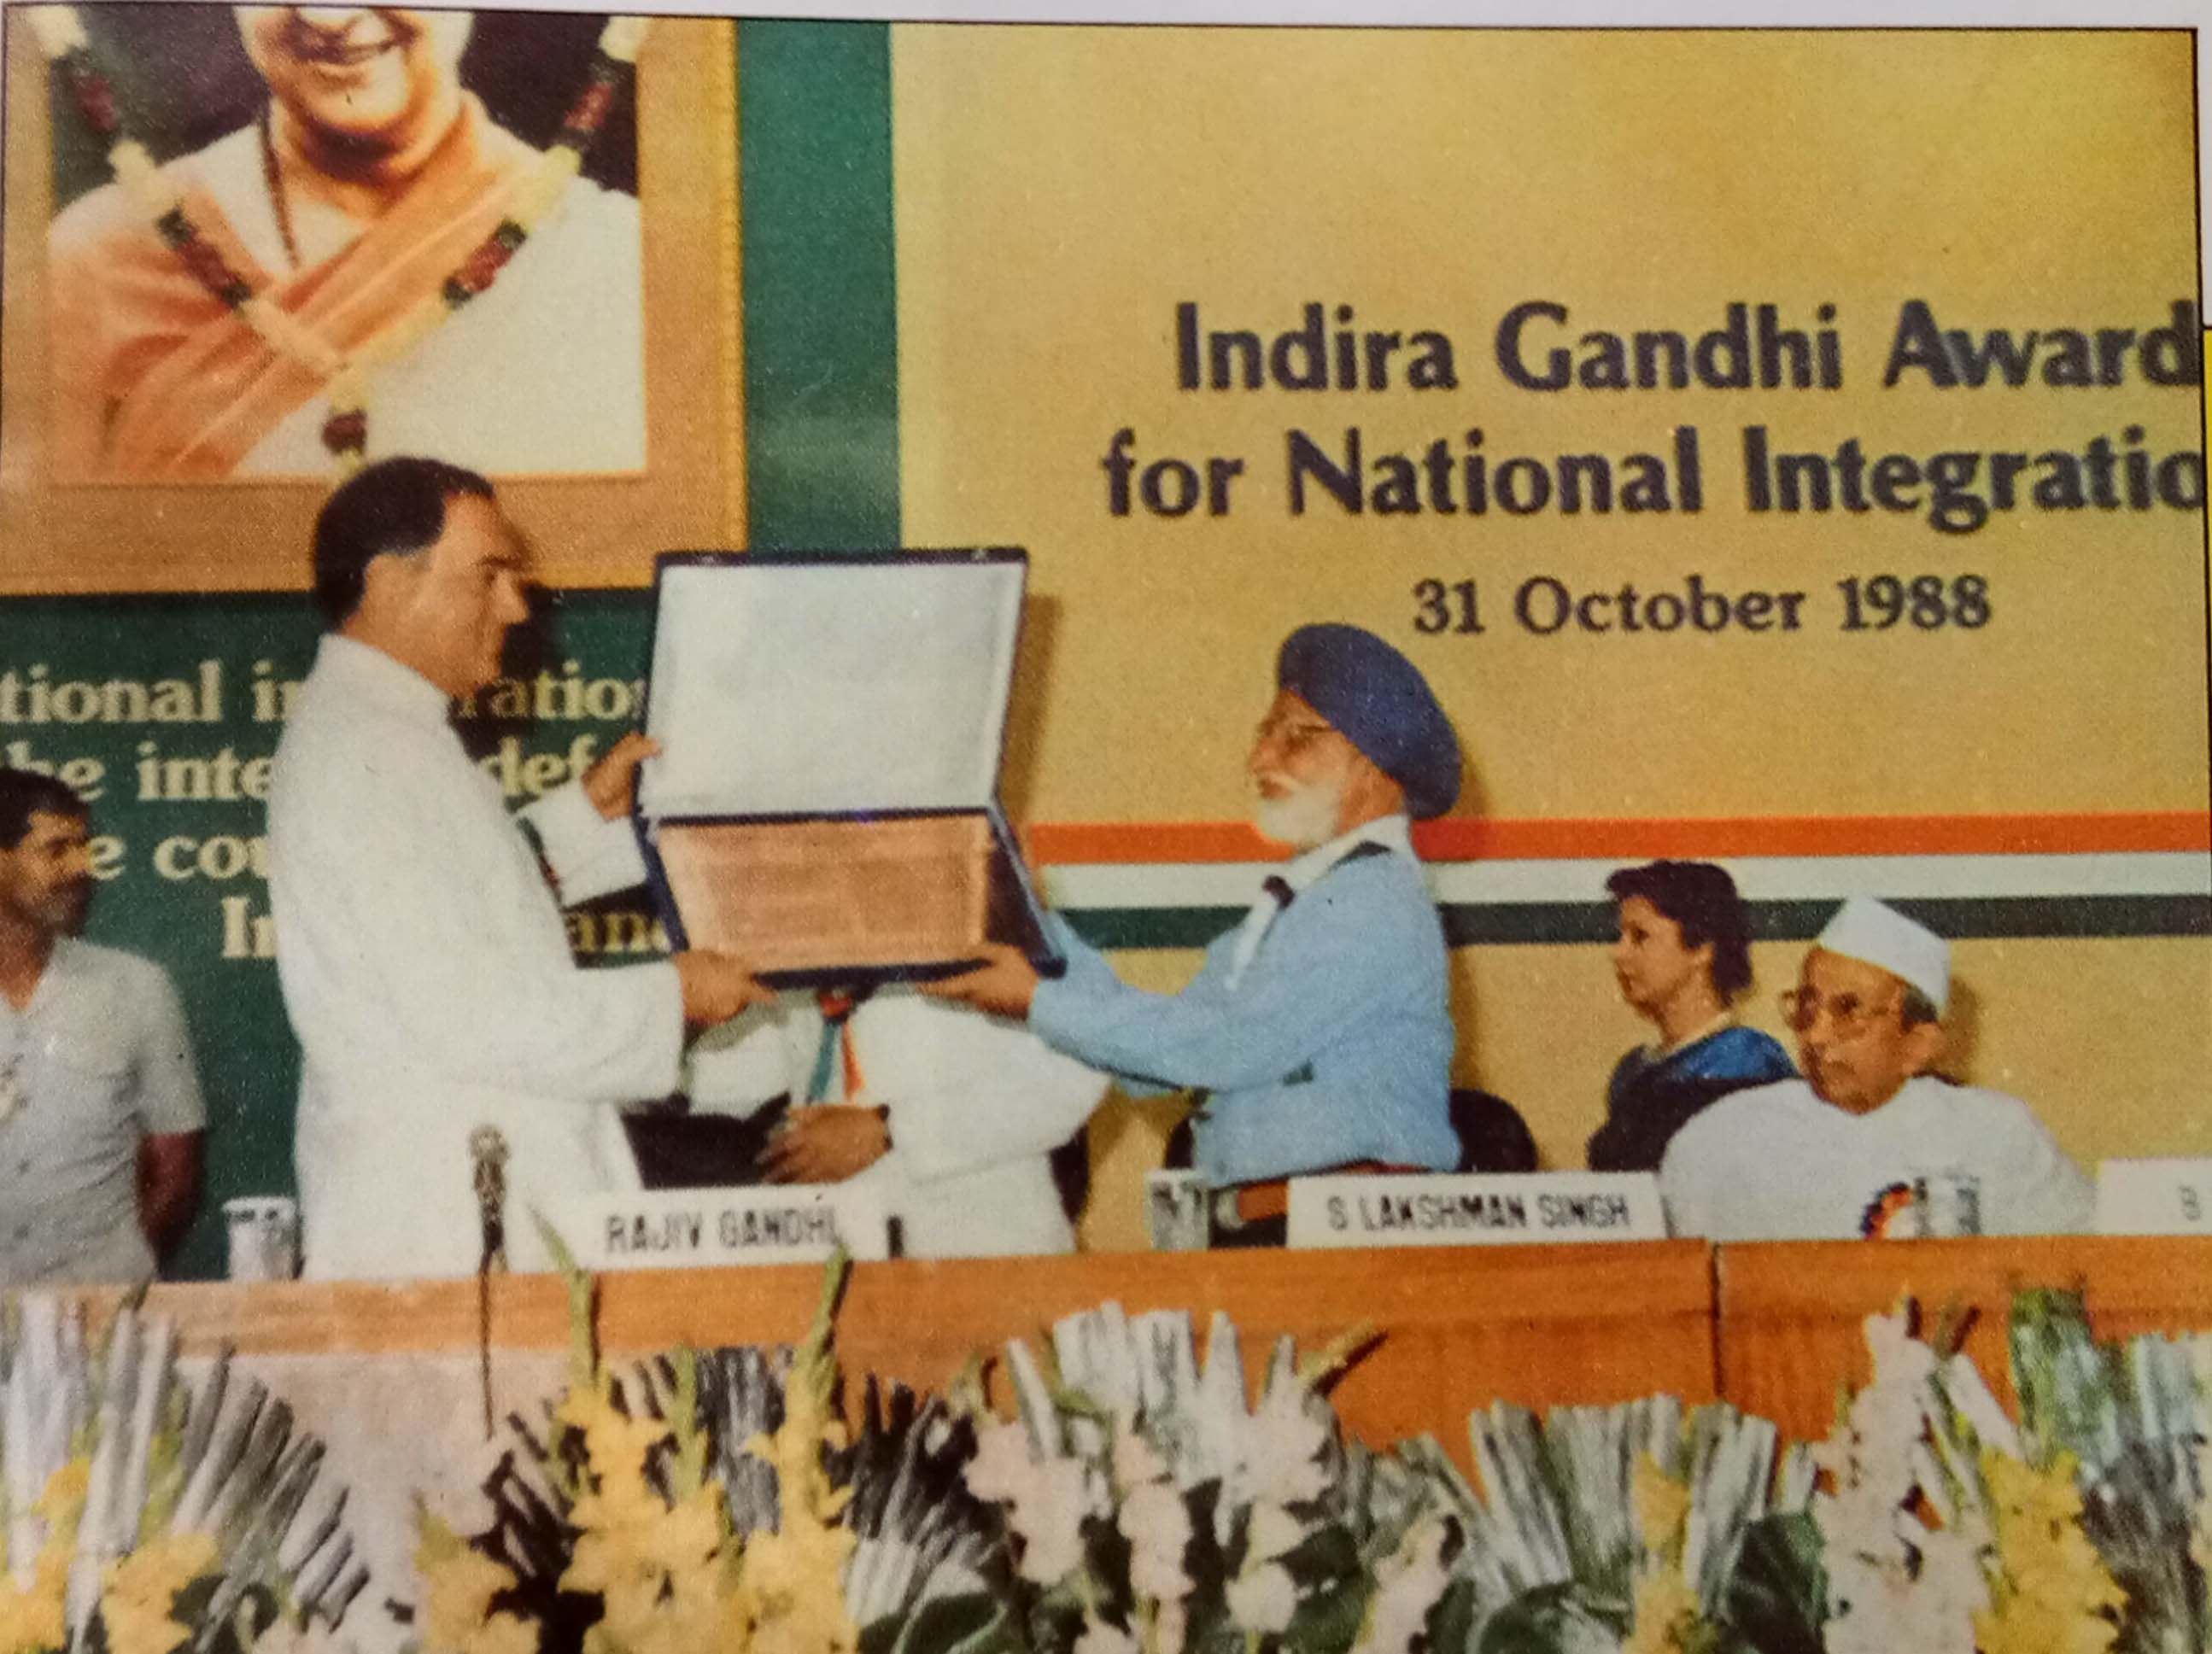 Indira Gandhi Award for National Integration, given by Prime Minister of India